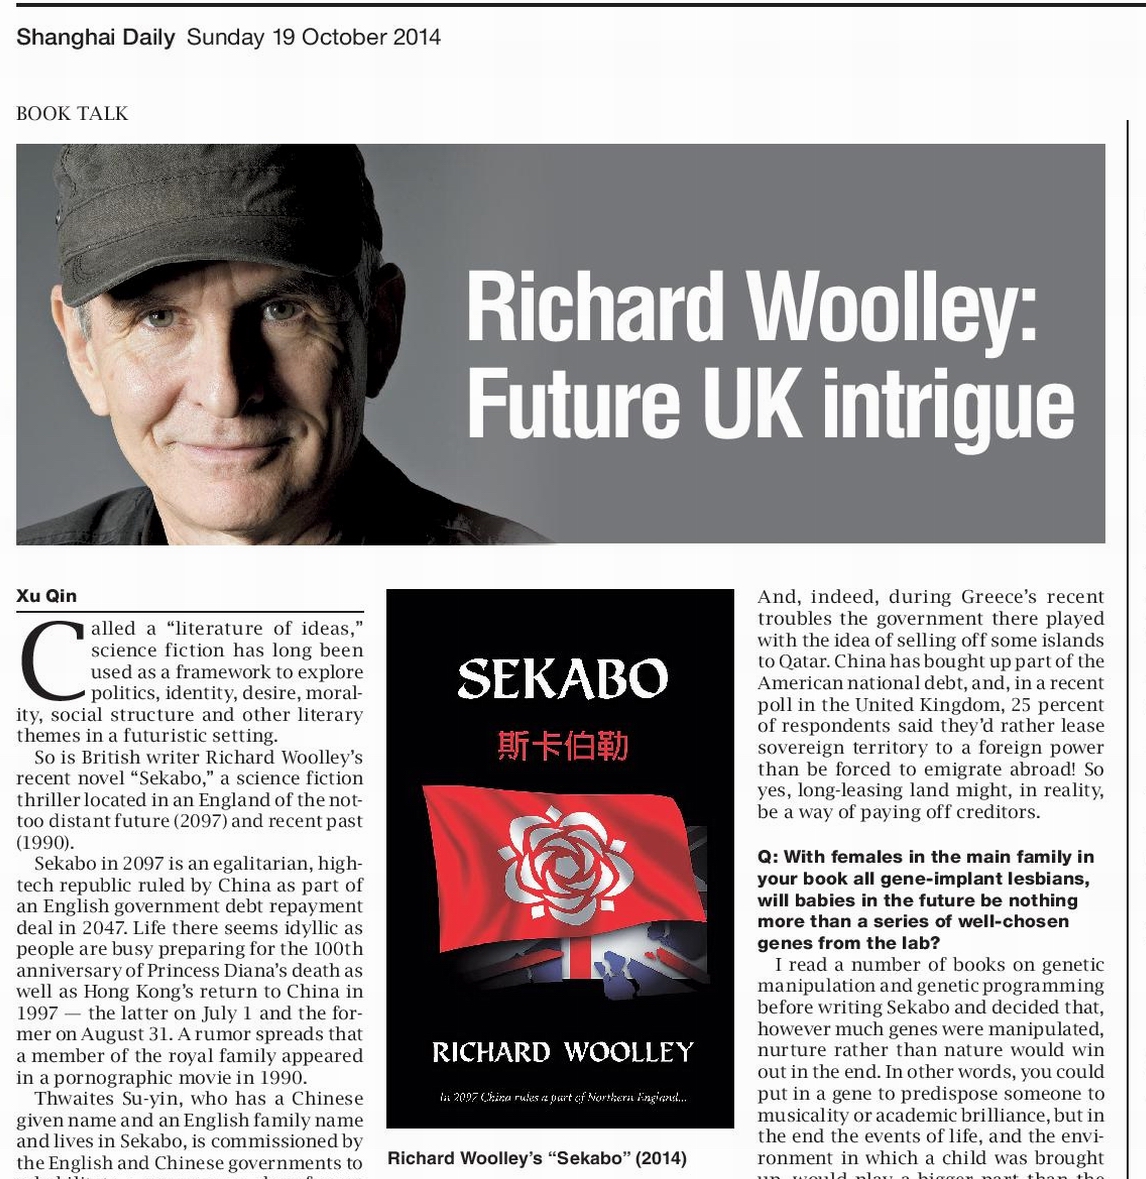 richardwoolley.com Shanghai Daily article on novel Sekabo 